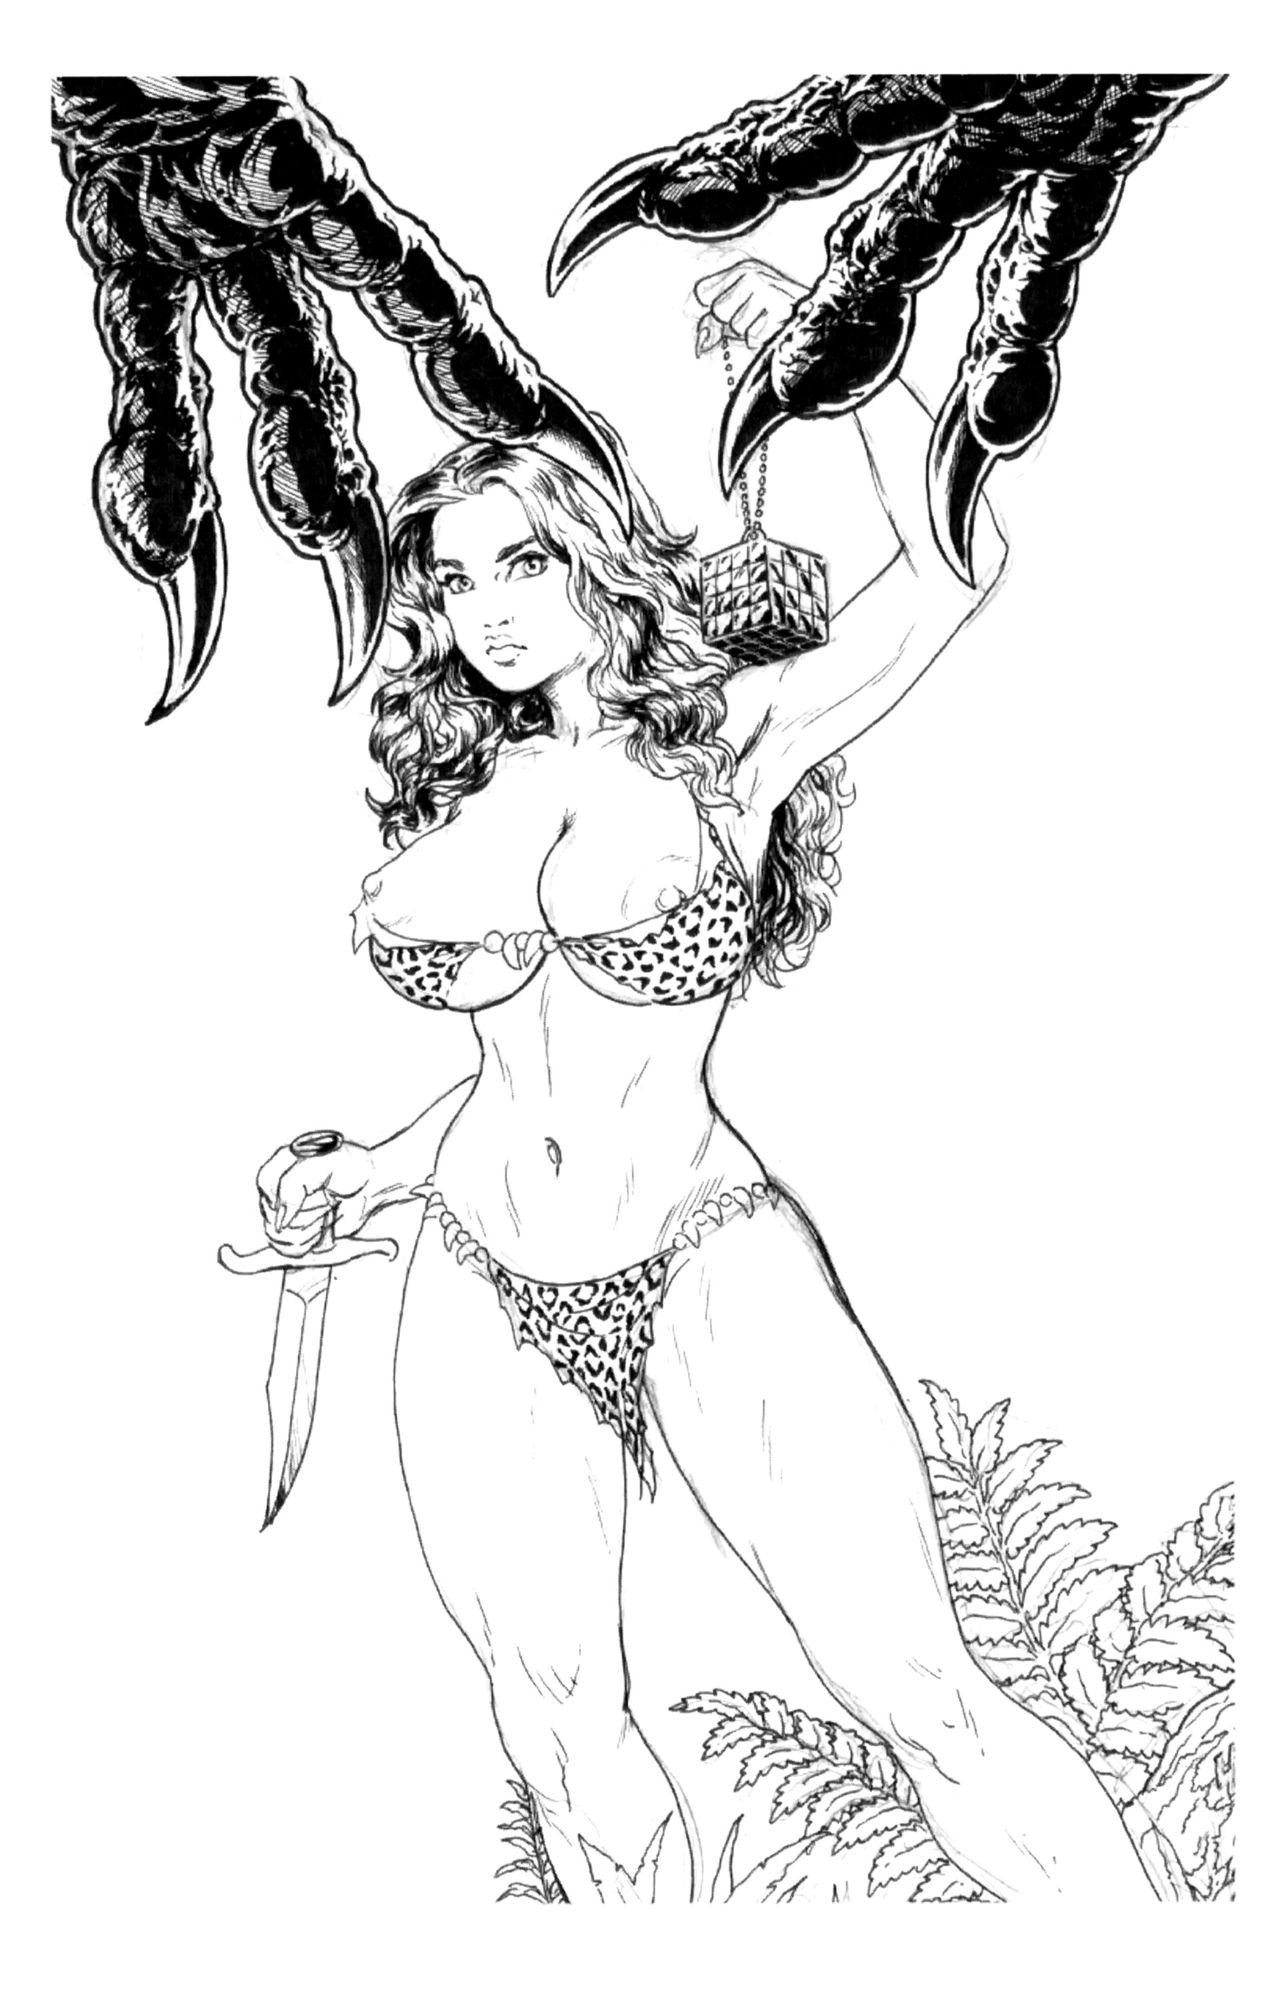 [Budd Root] Cavewoman, PU's from Budd, HeroesCon 2011 Sketchbook 17